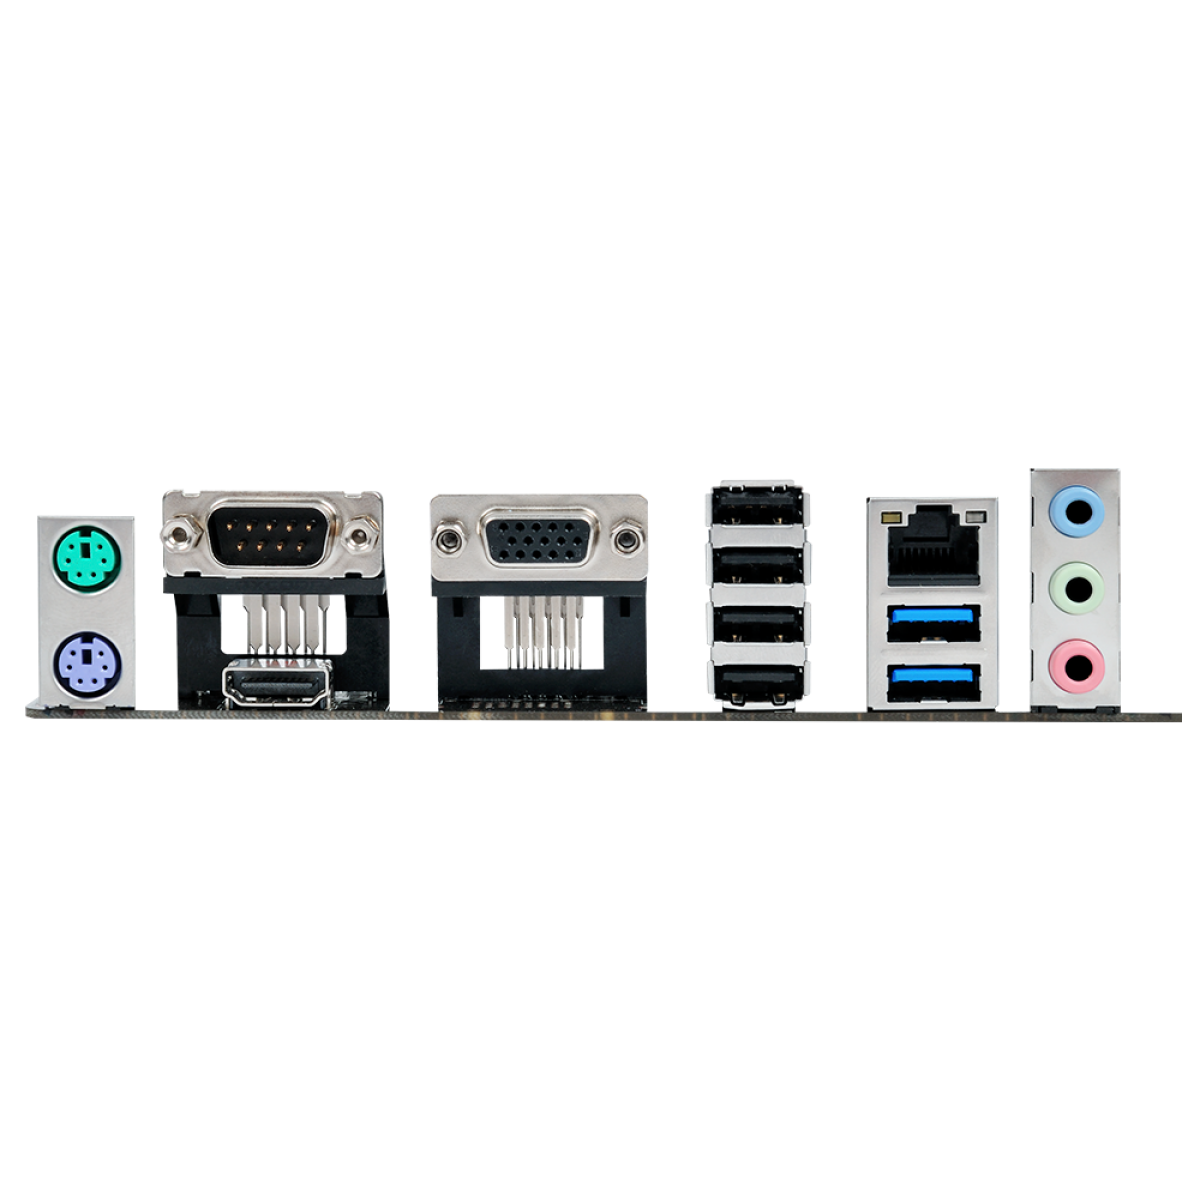 Placa Mãe Asus H110M-C/BR, Chipset H110, Intel LGA 1151, mATX, DDR4